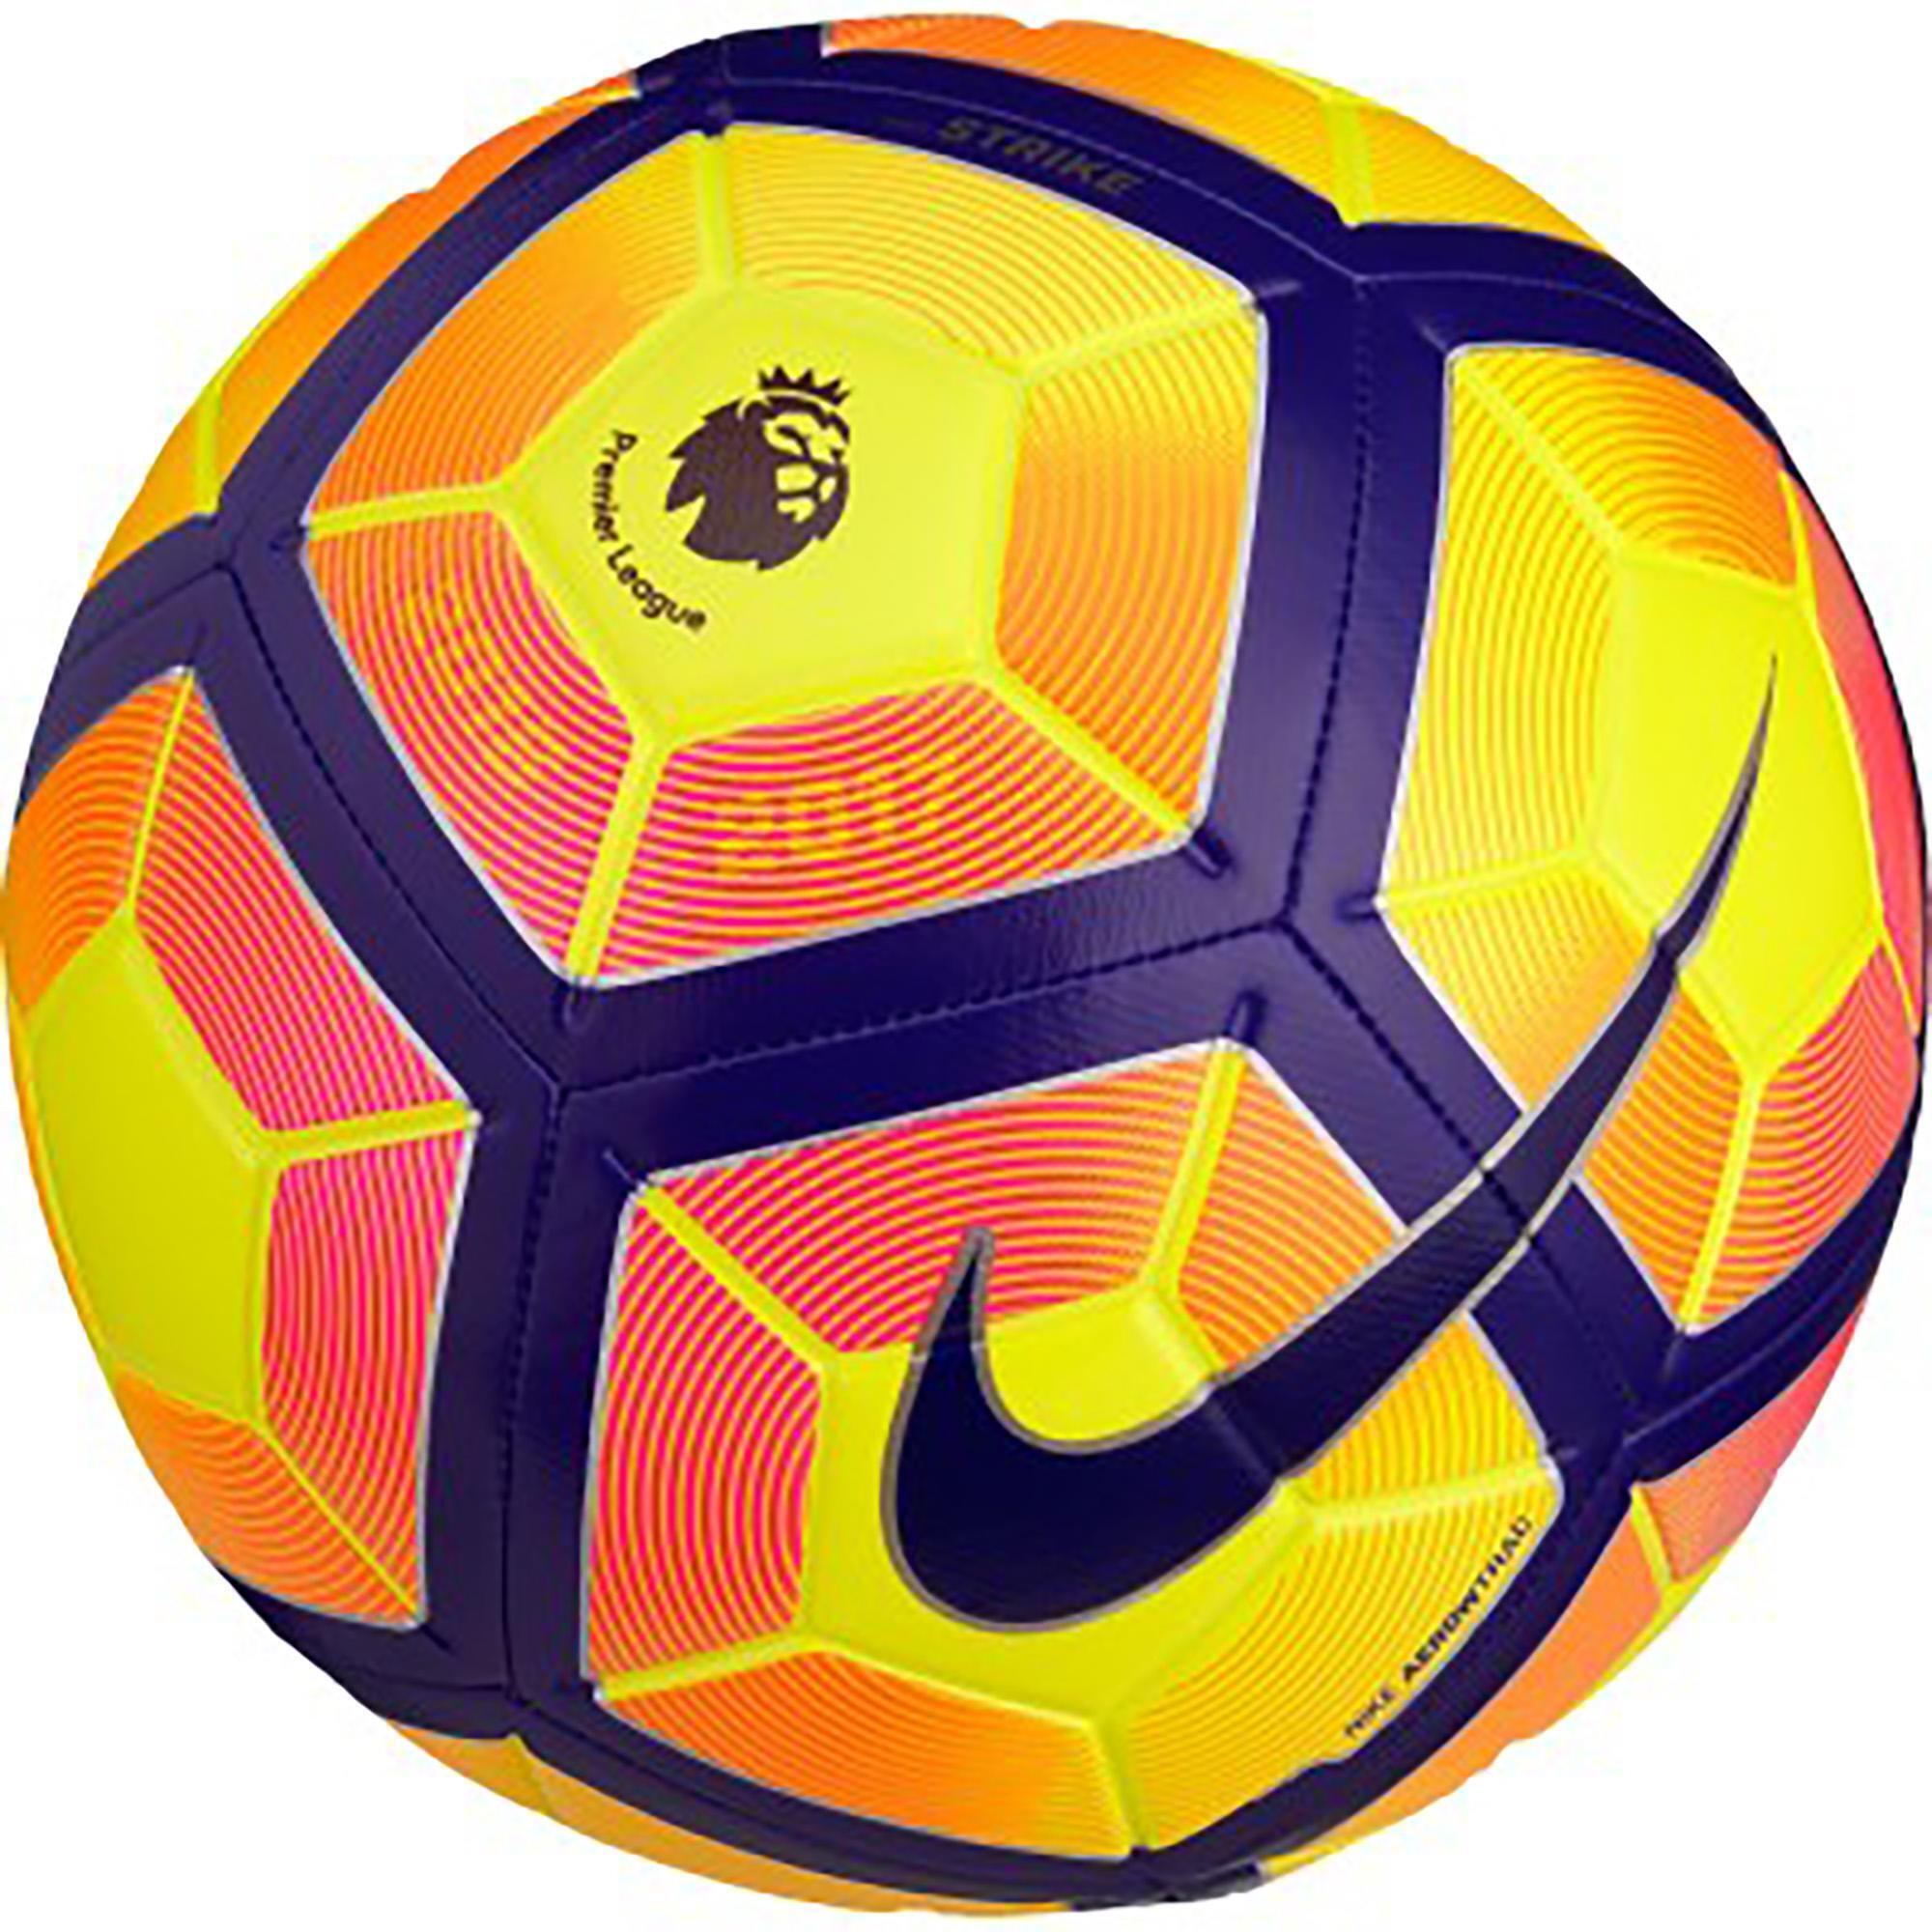 NIKE English Premier League Strike Football - Yellow